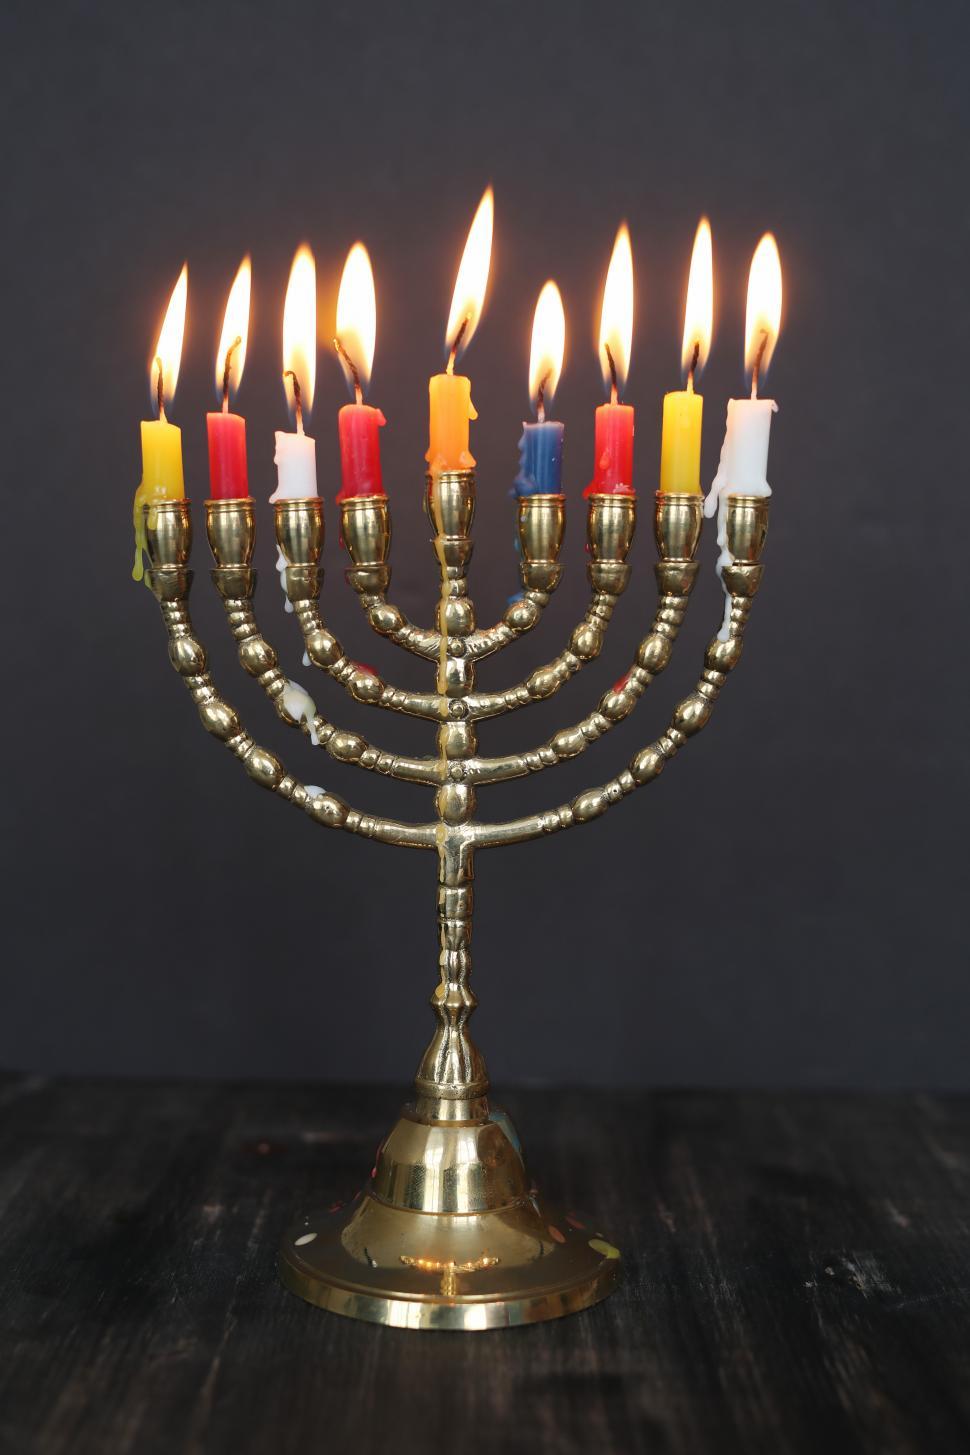 Free Image of Hanukkah Menorah 